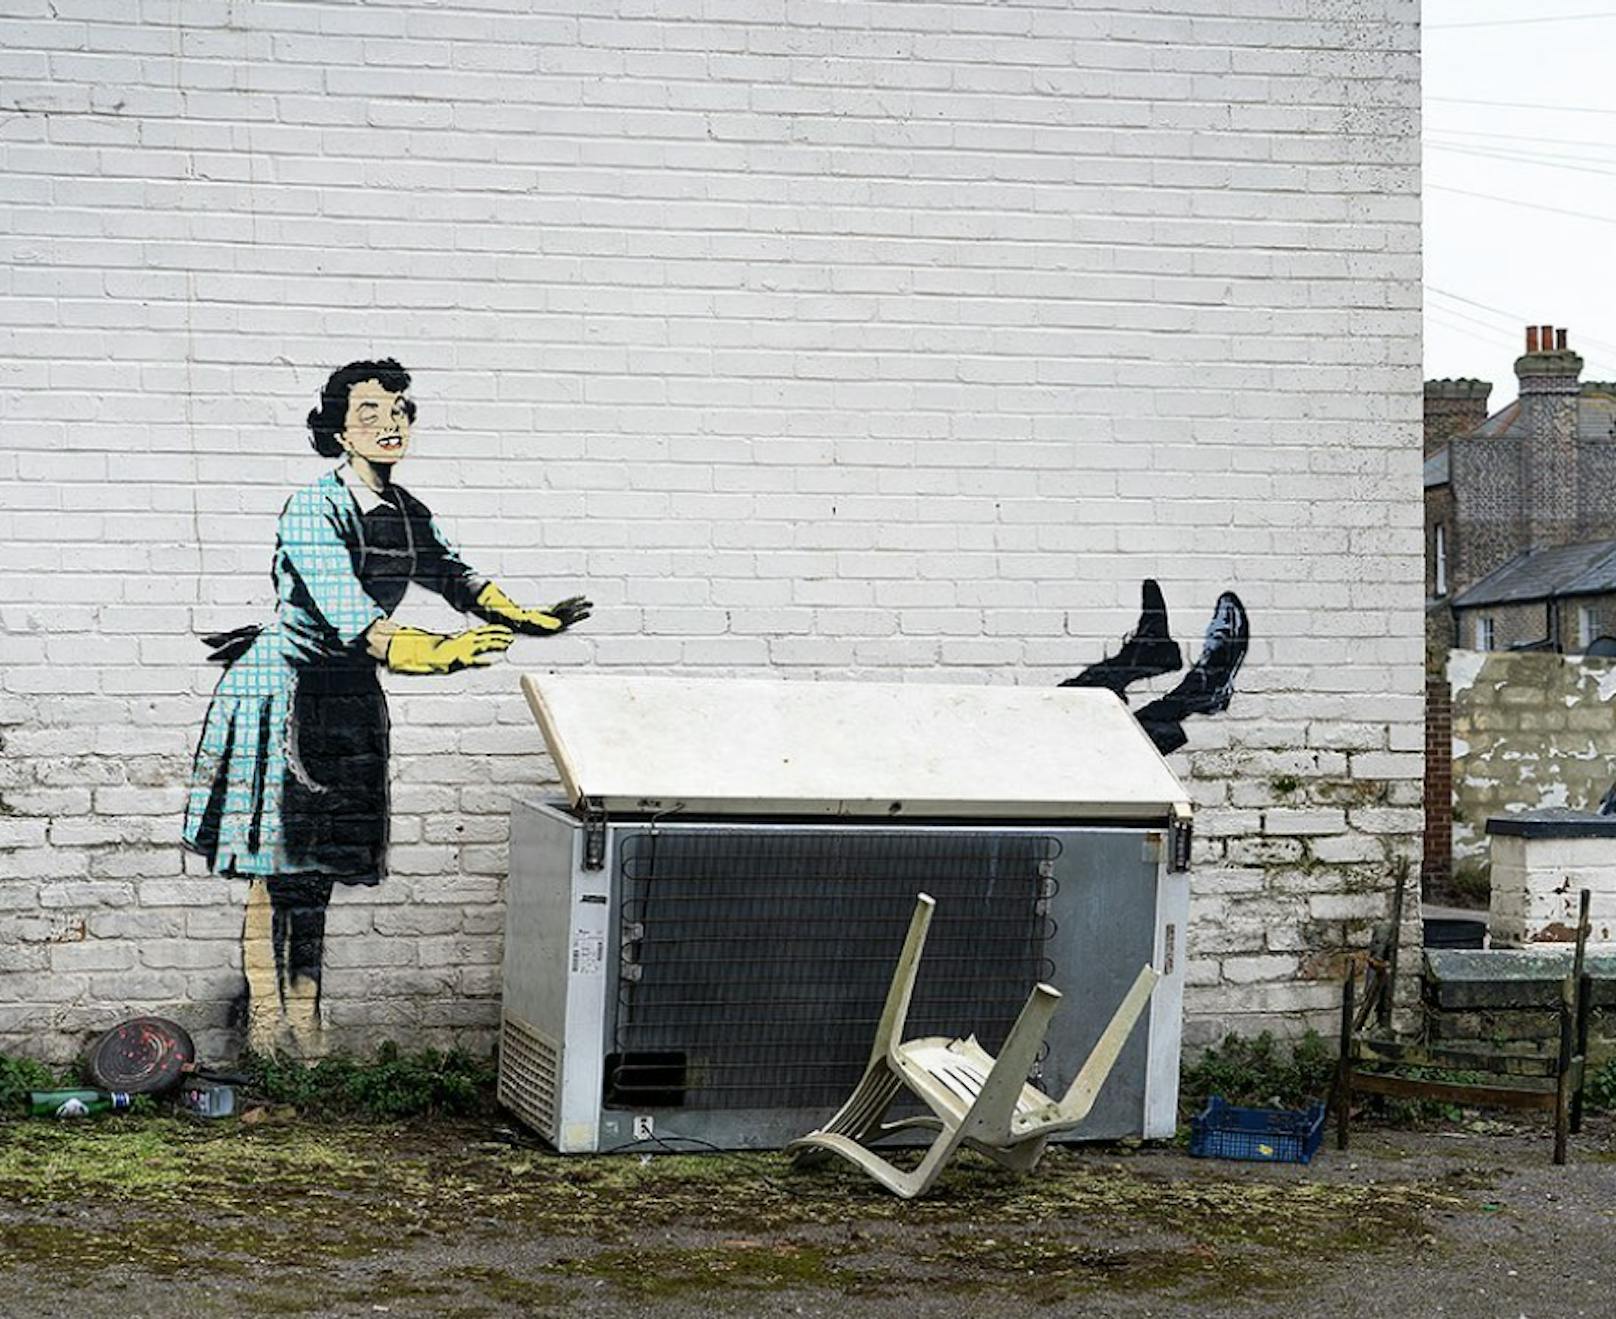 Banksys neuster Instagrampost